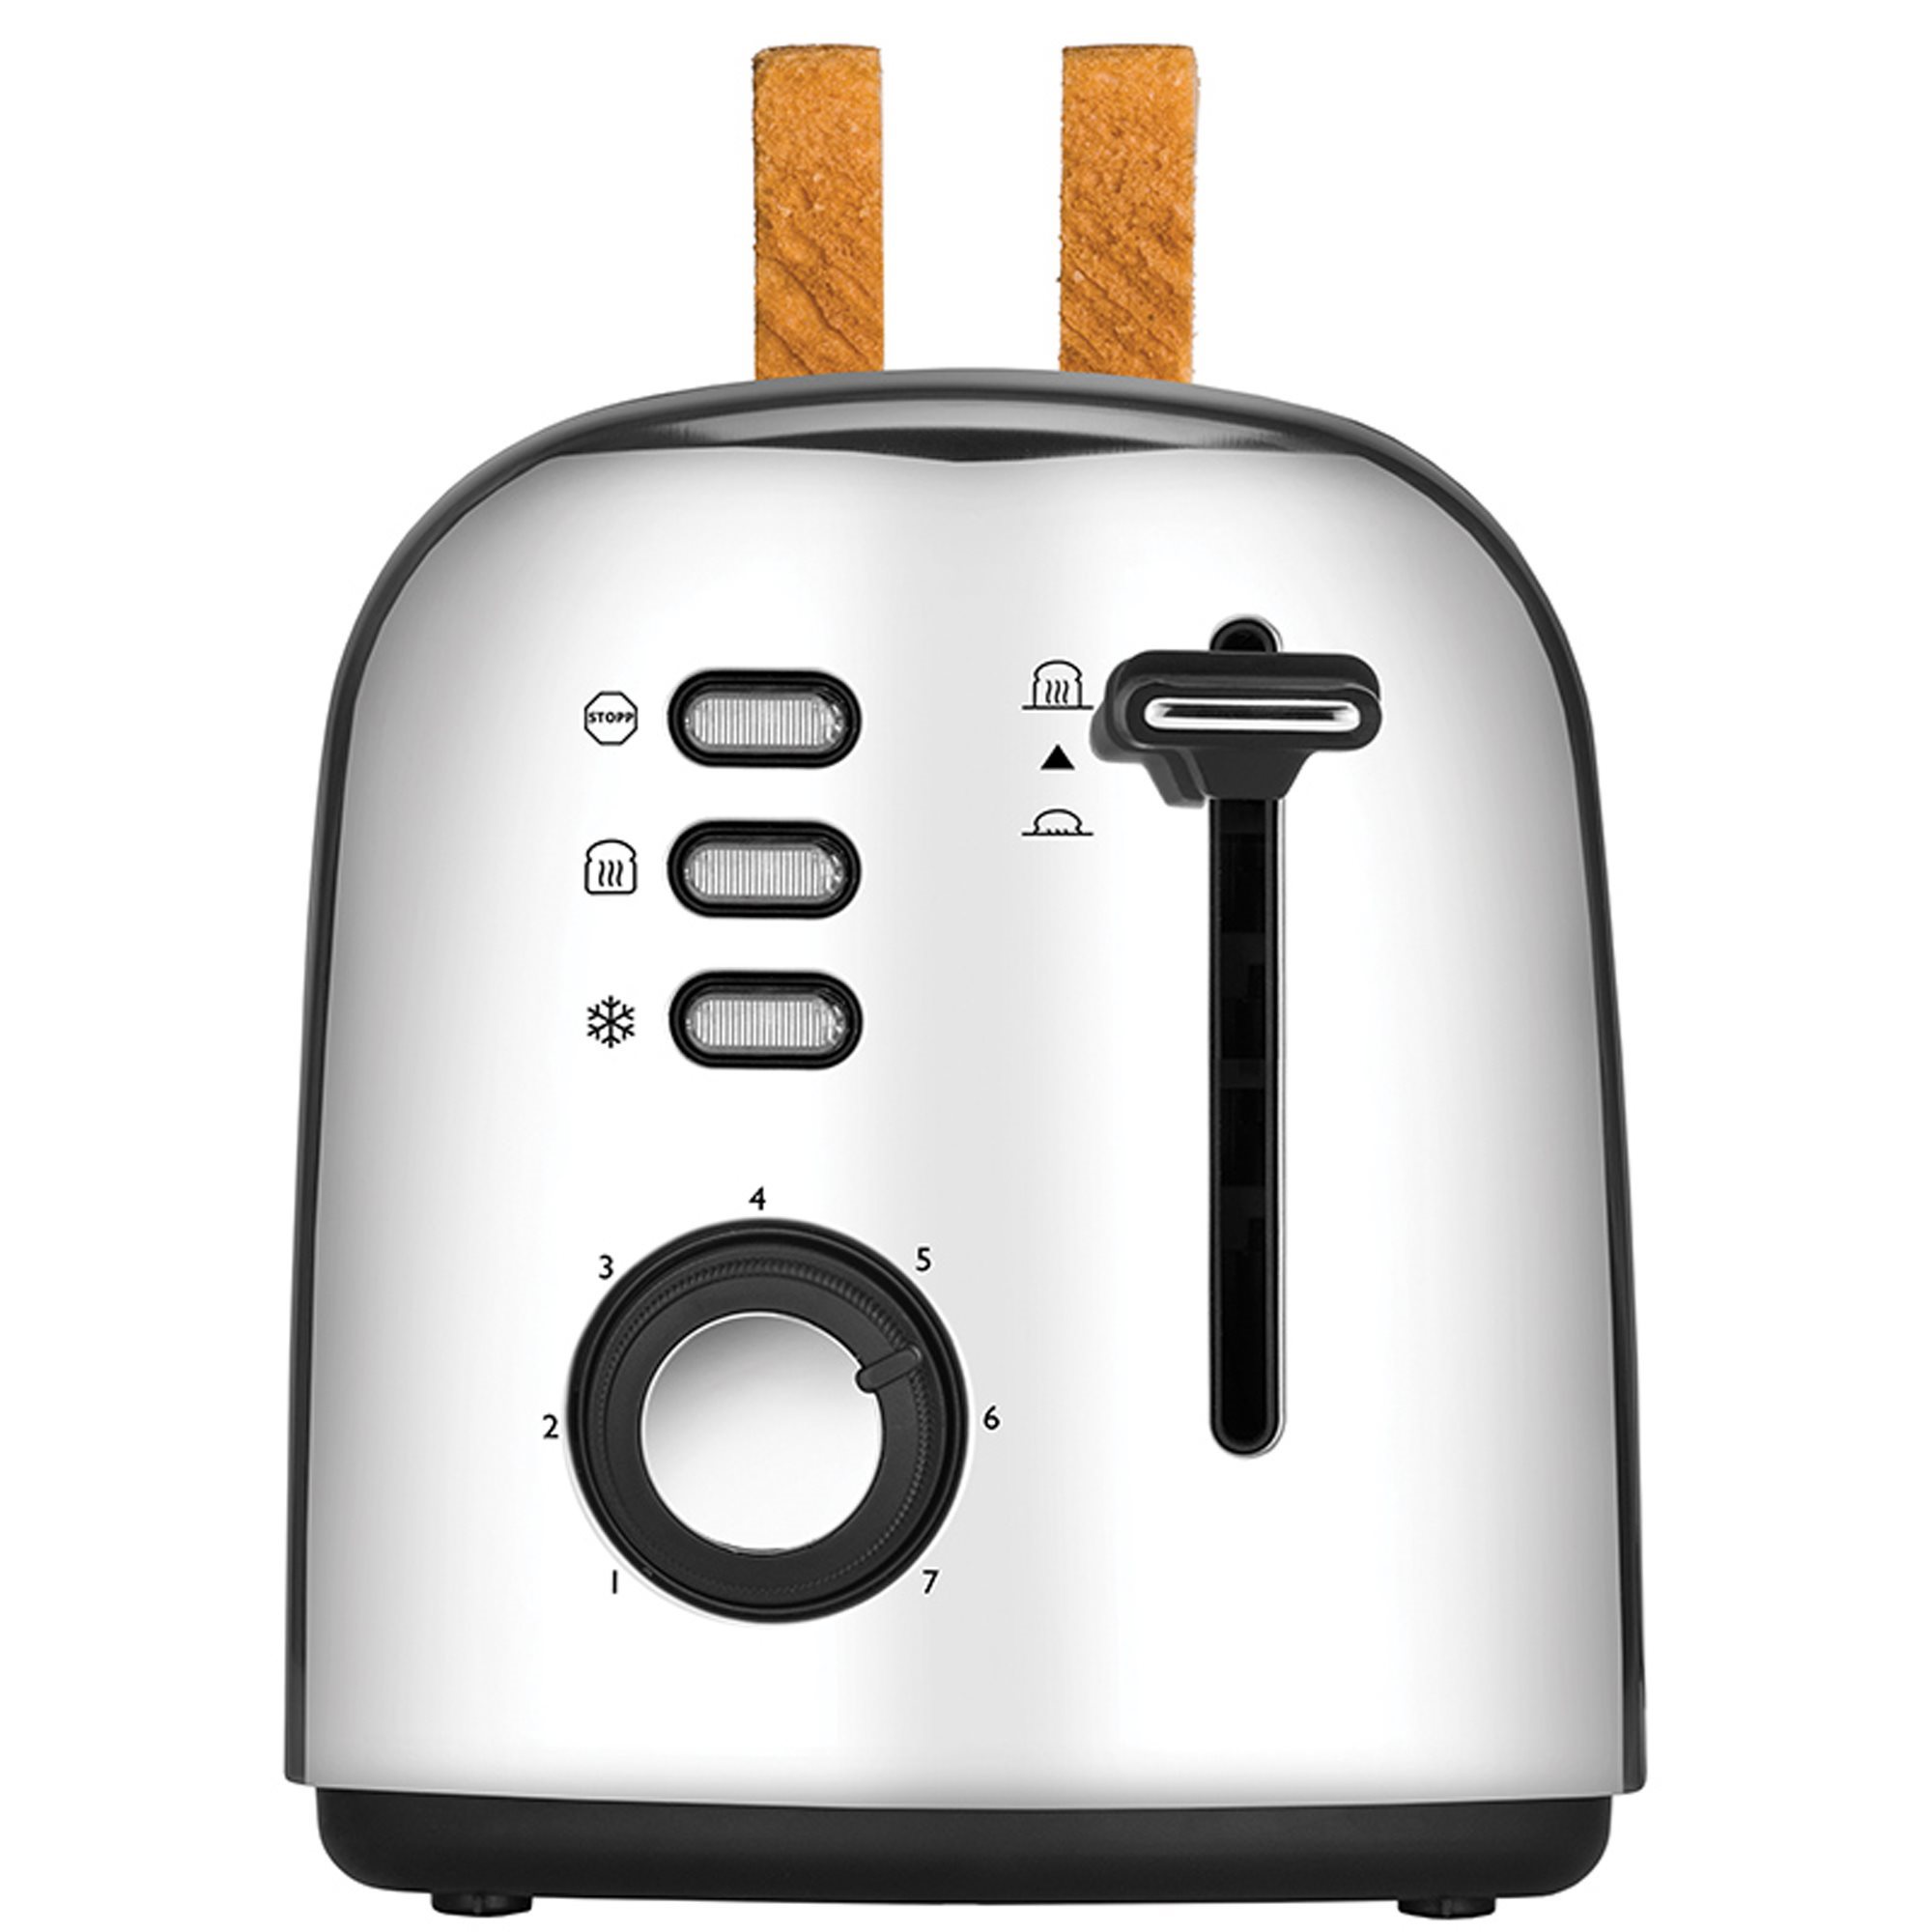 Toaster 2 sloturi lungi Retro, 1500 W - Unold